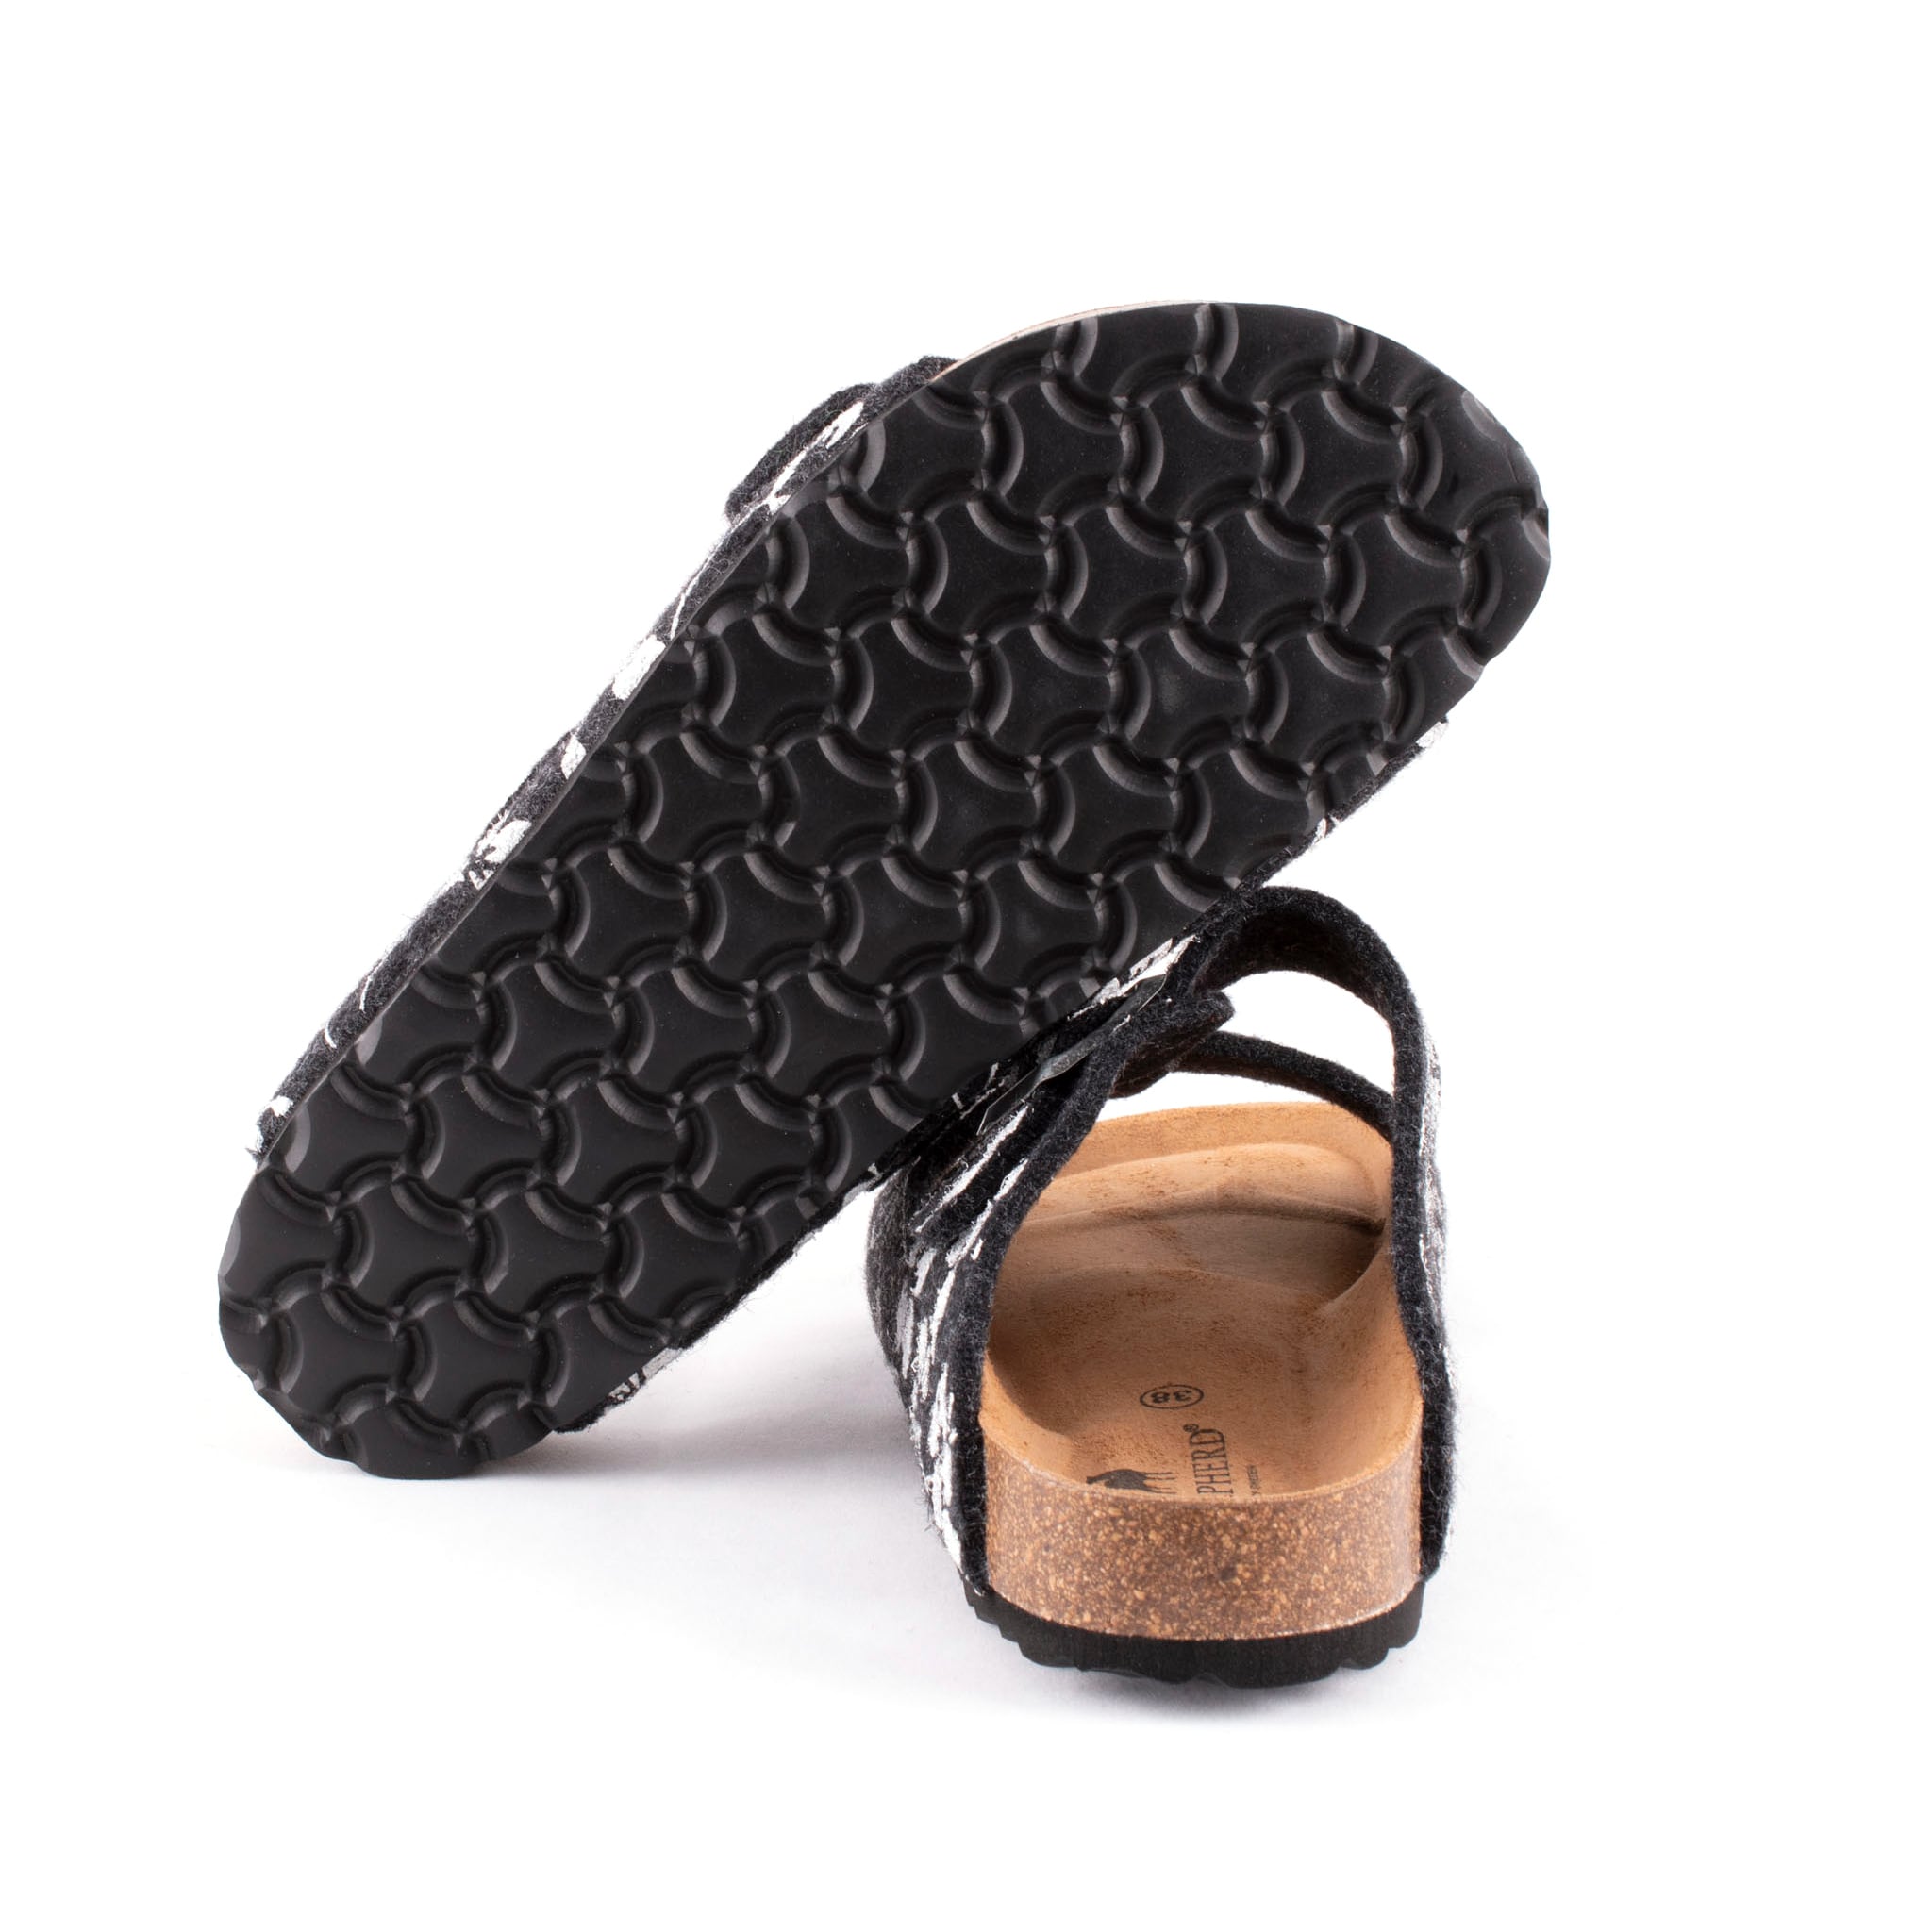 Mathilda sandals